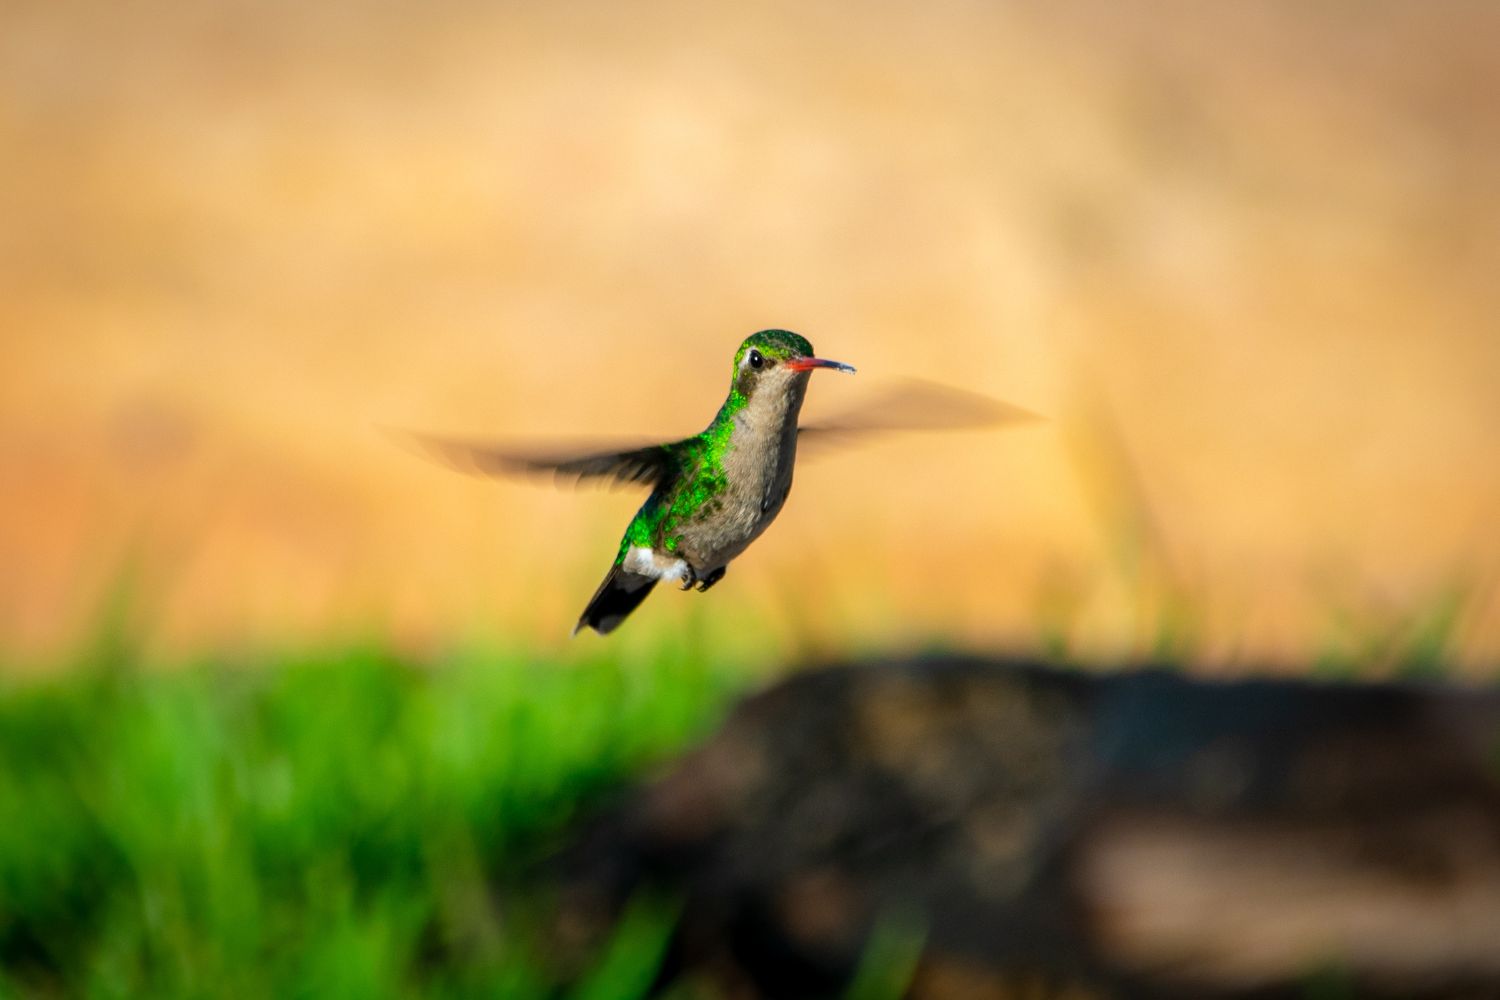 4. Hummingbird migration